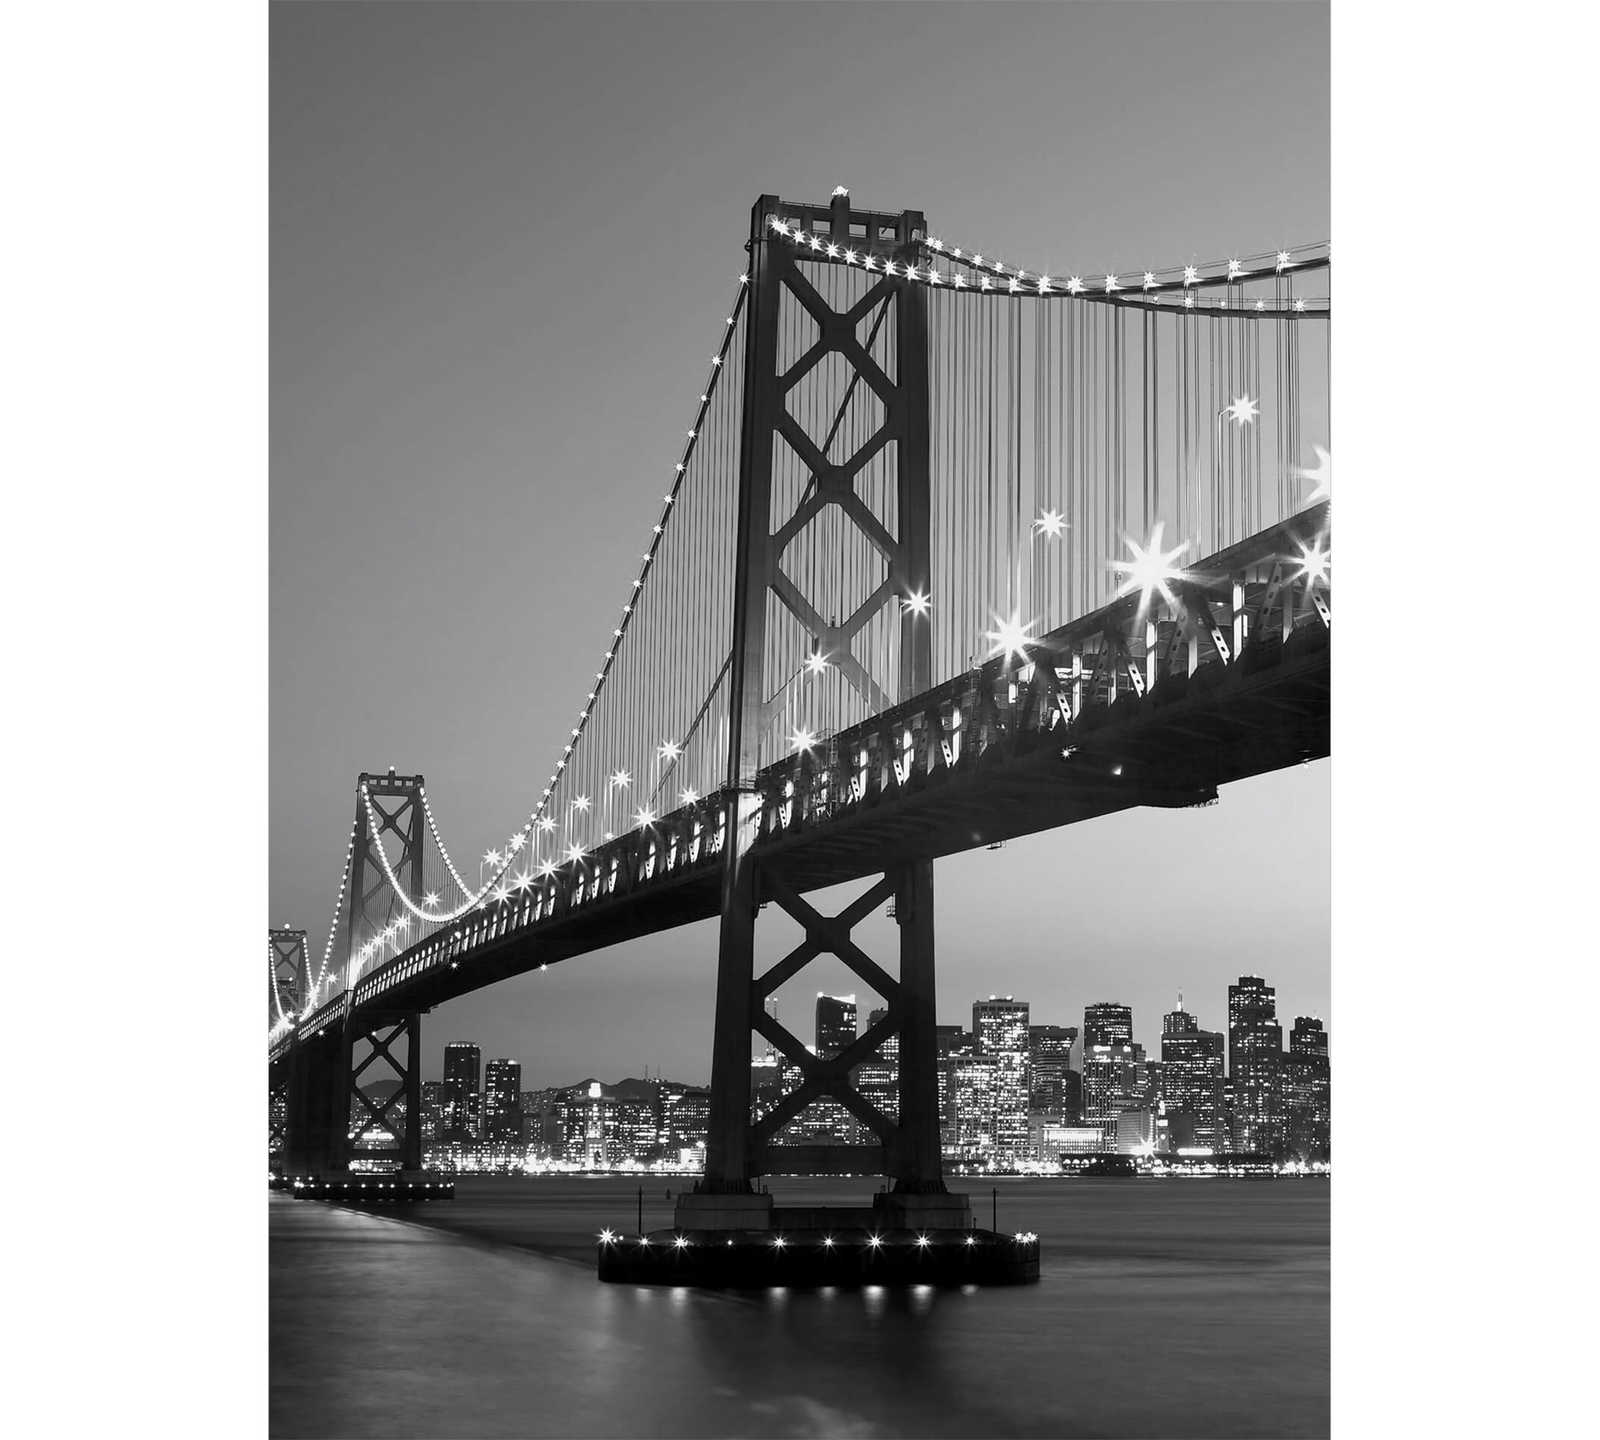         San Francisco photo wallpaper black and white, portrait format
    